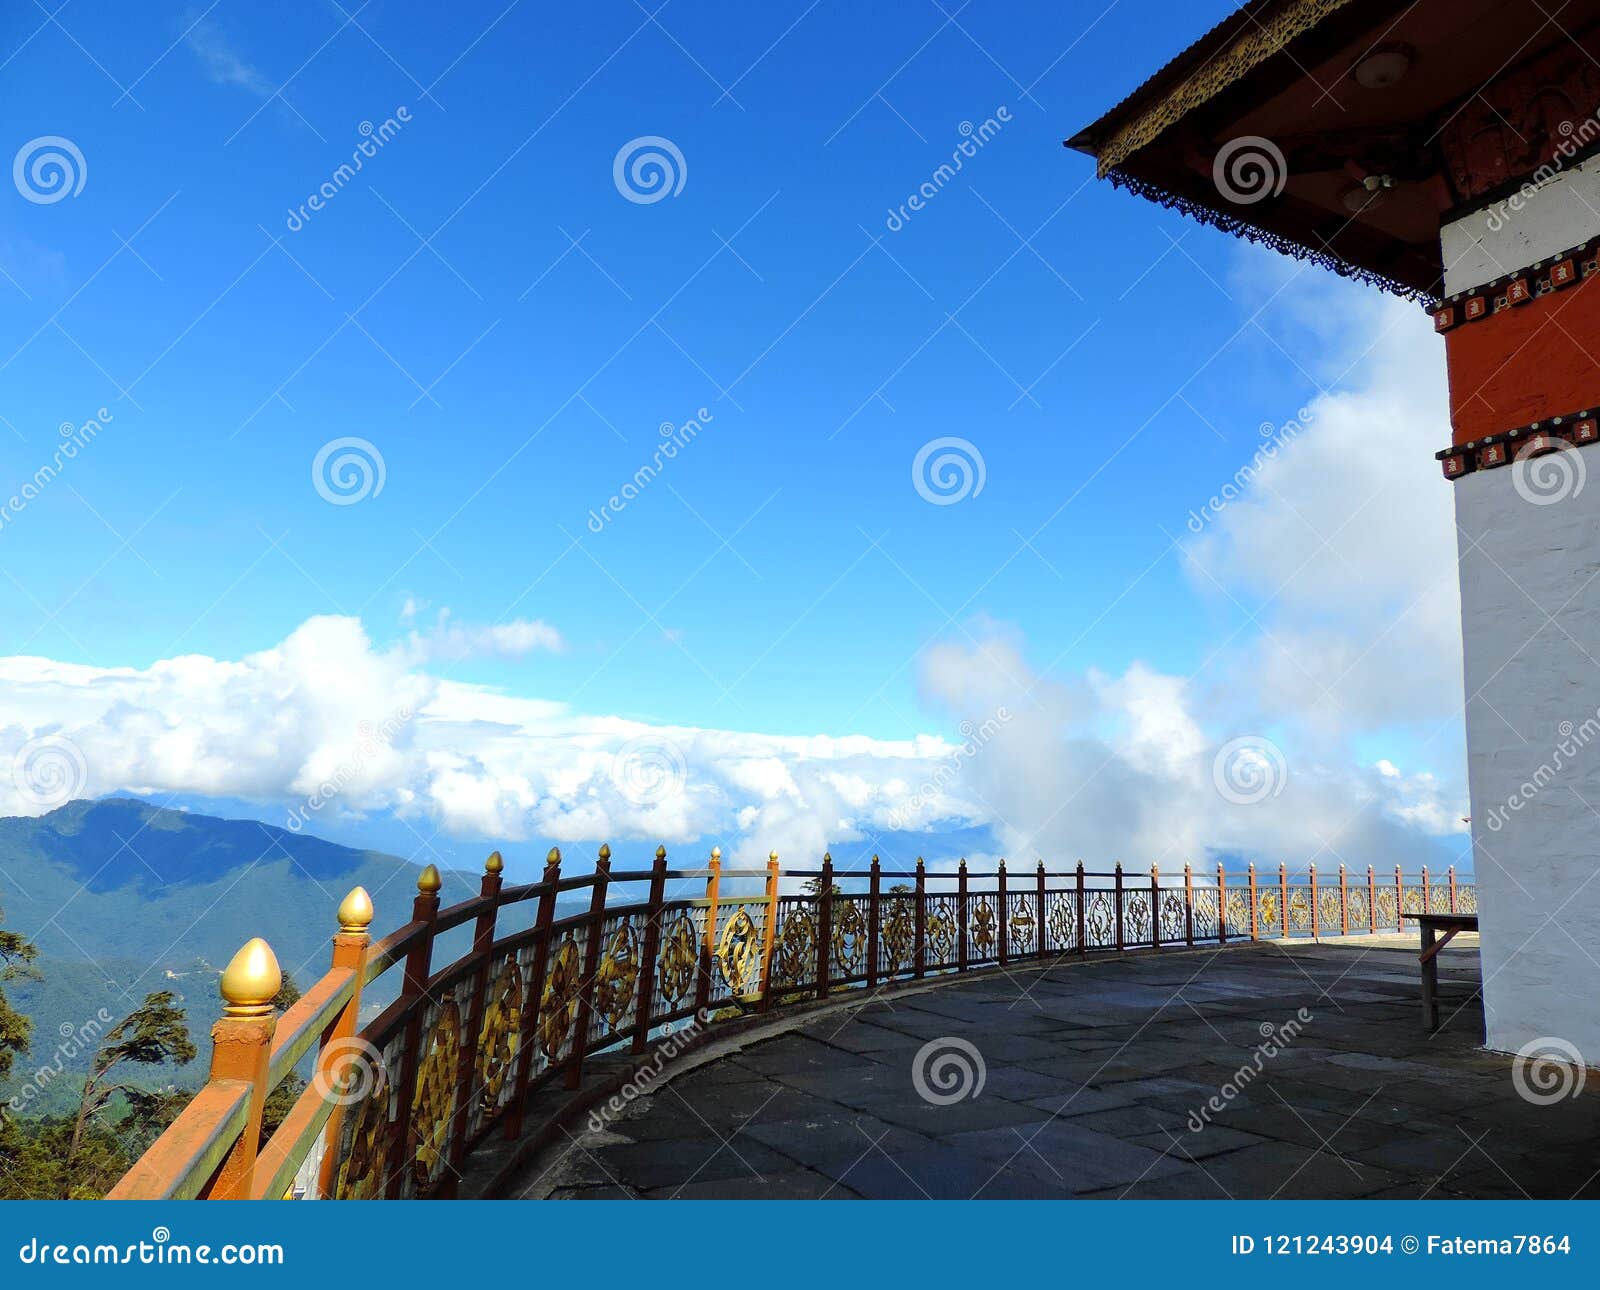 druk wangyal temple at dochula pass, bhutan